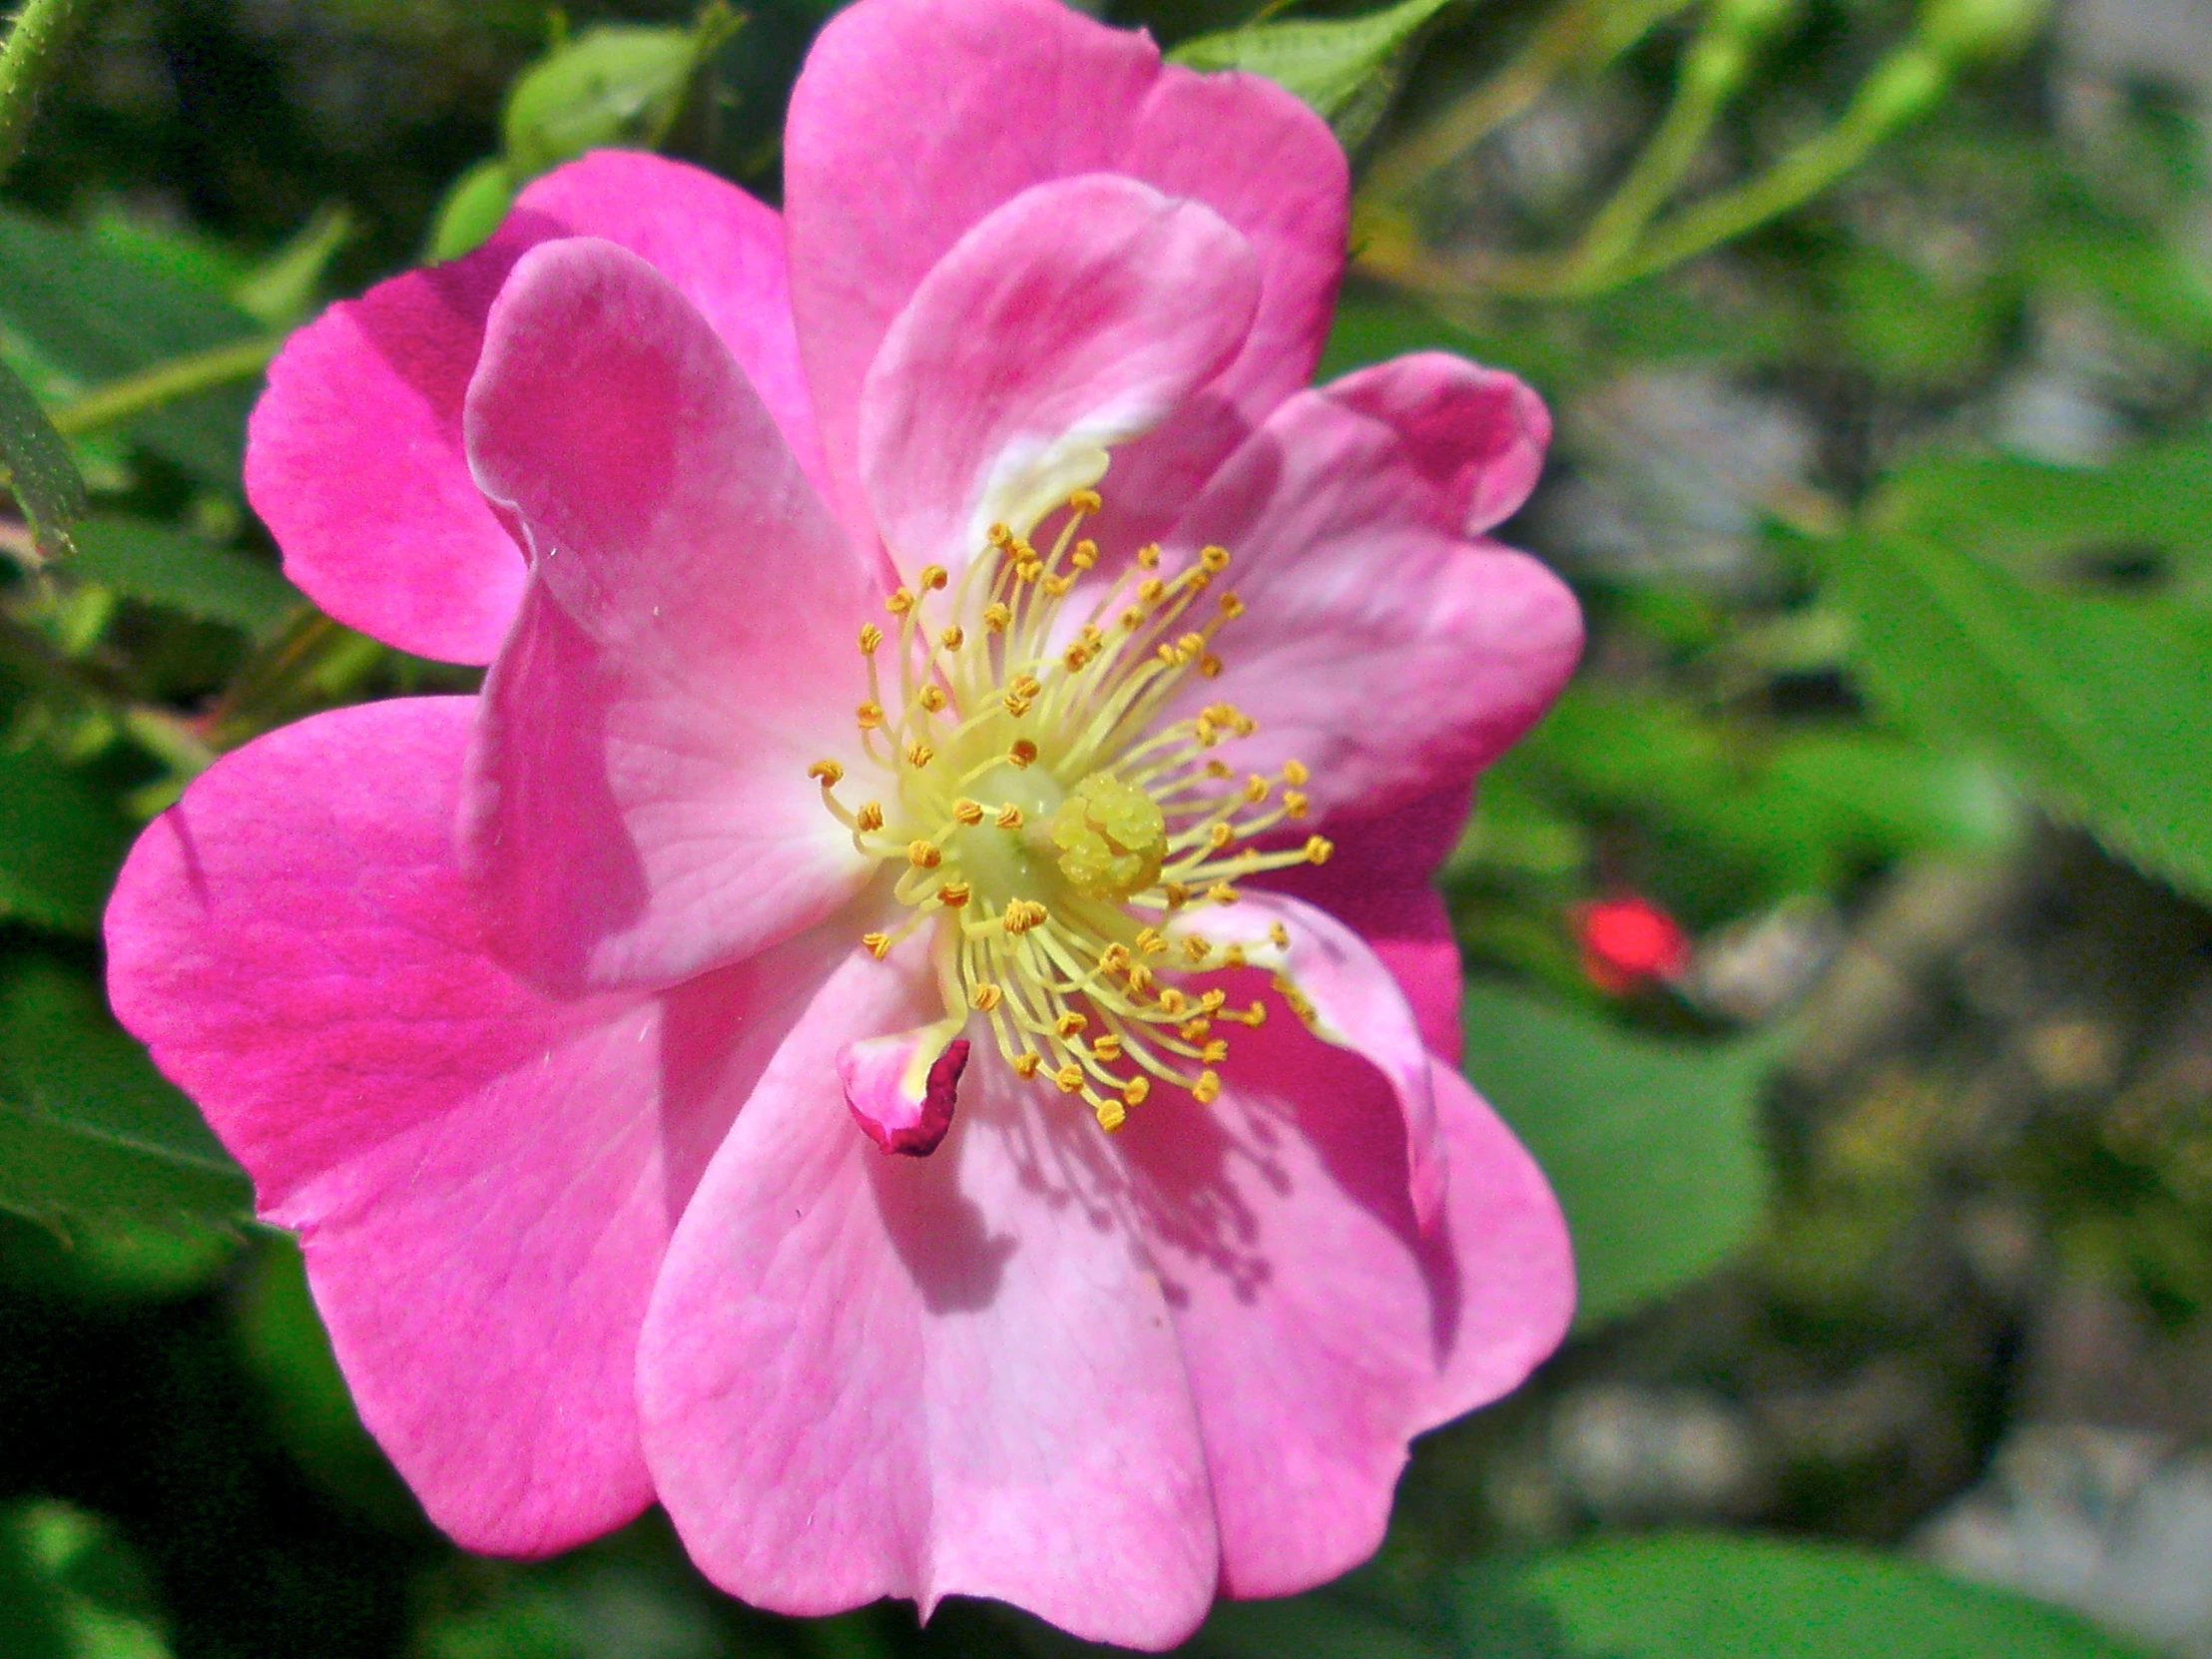 a single pink rose flower growing near a shrub